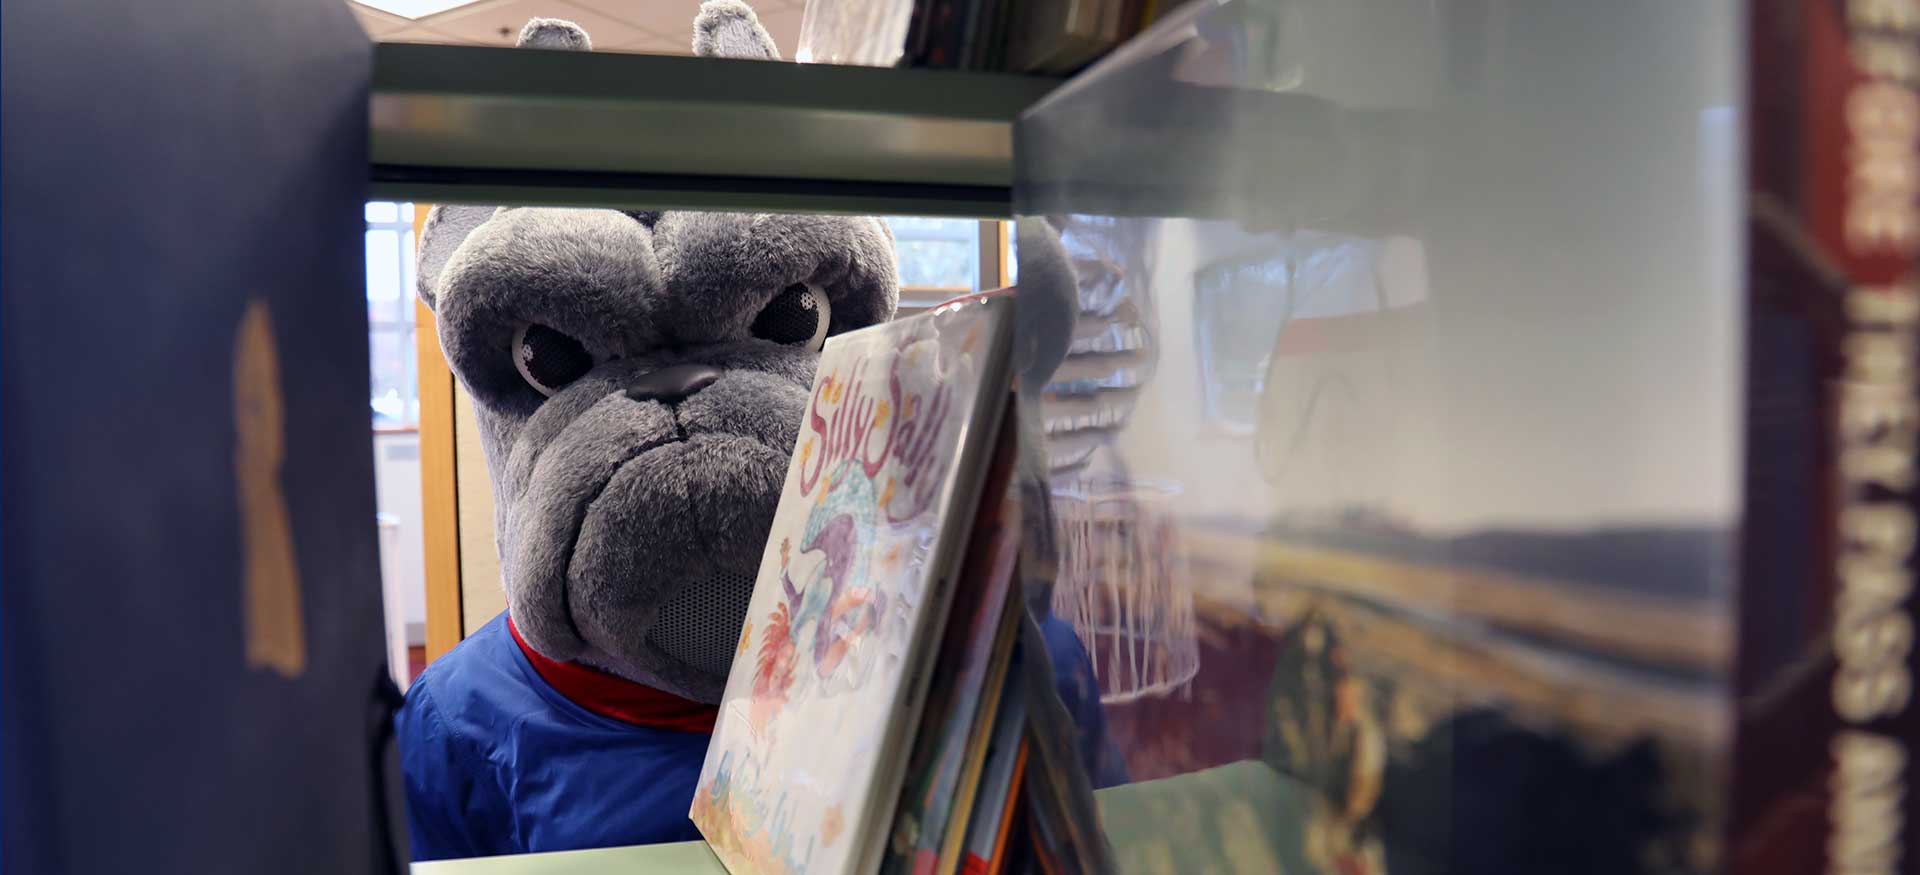 Bulldog peeking through library shelves banner